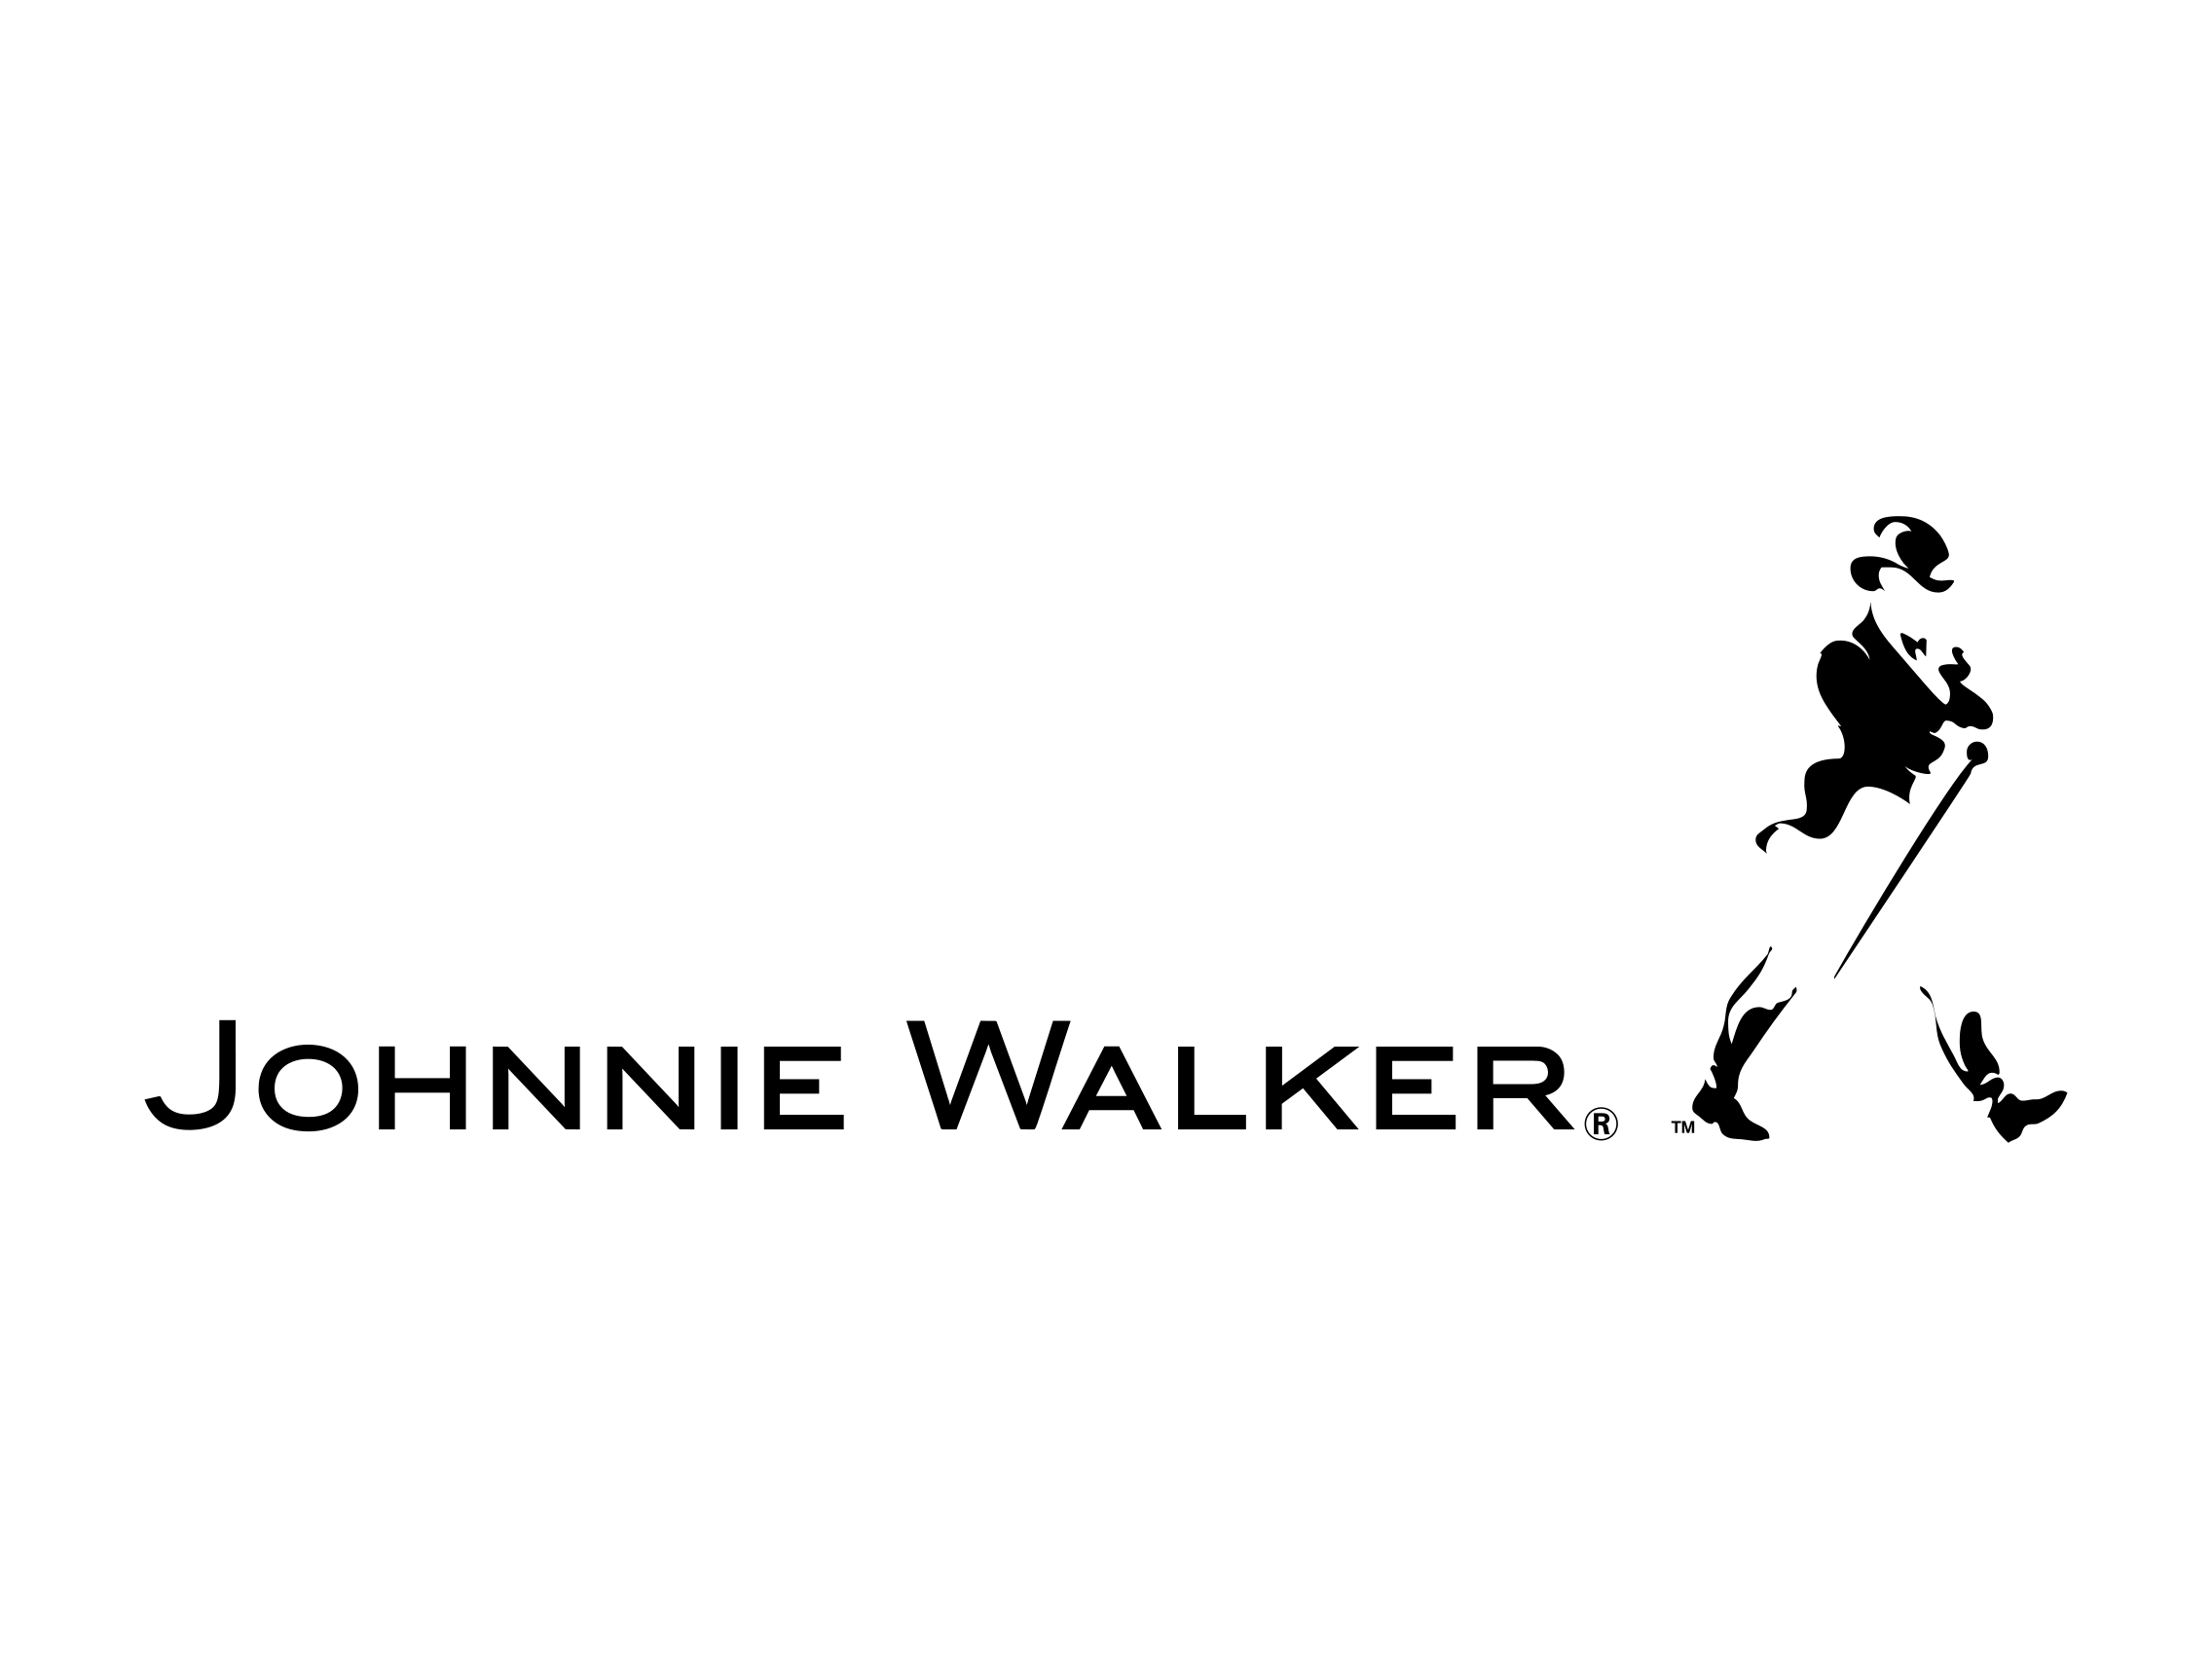 Whiskey Johnny Walker Logo - Johnnie Walker logo